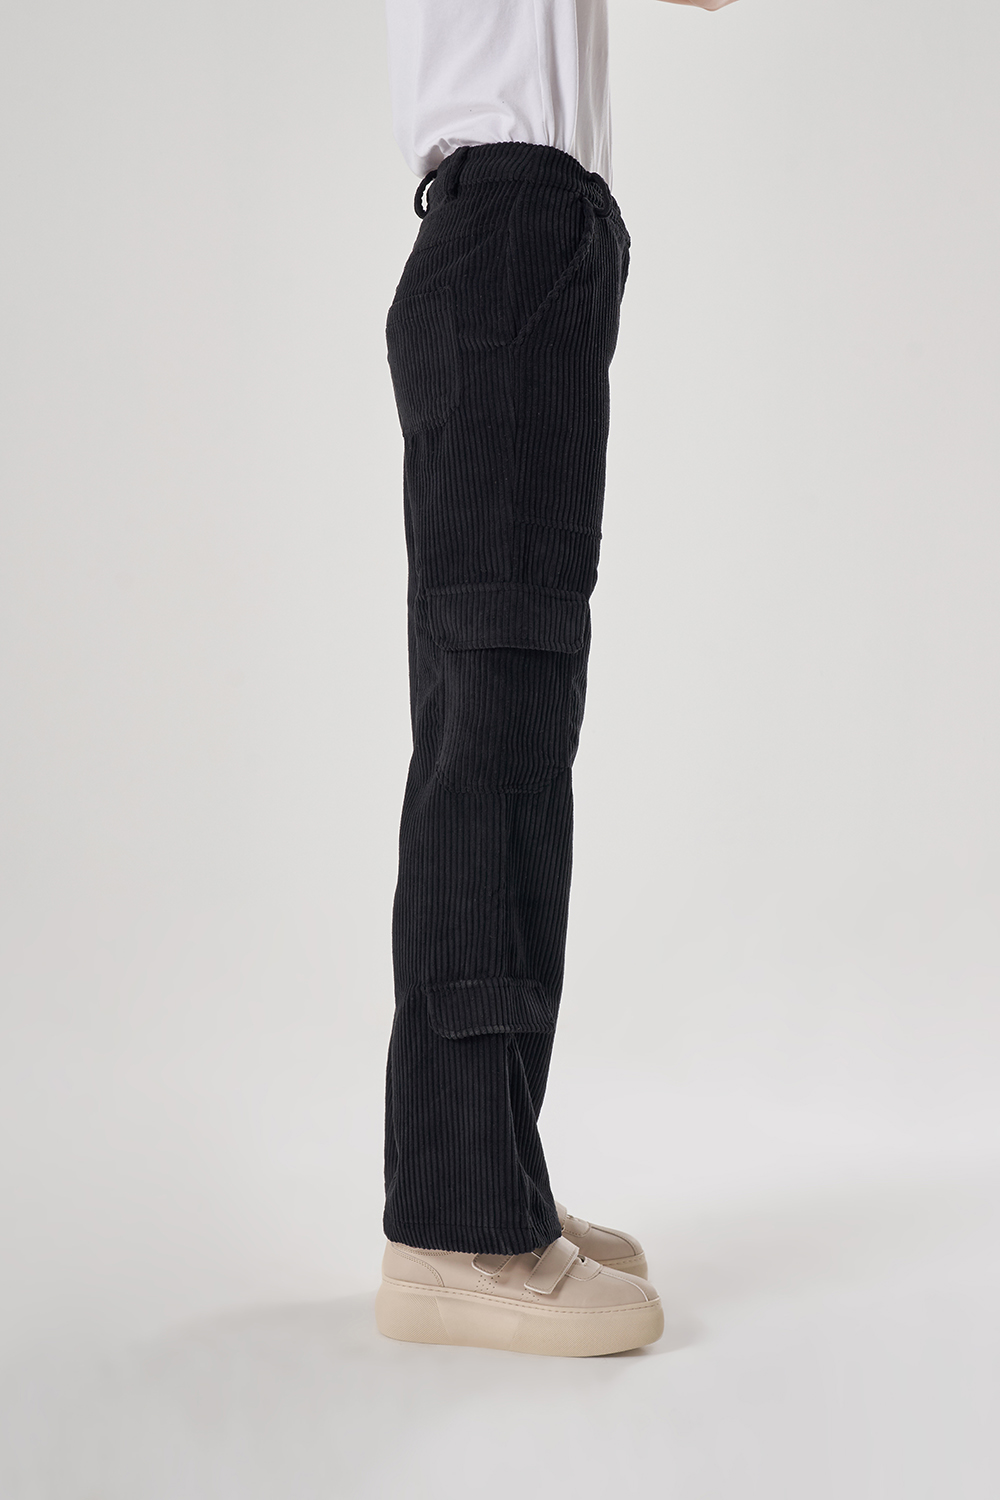 Corduroy Black Velvet Pants